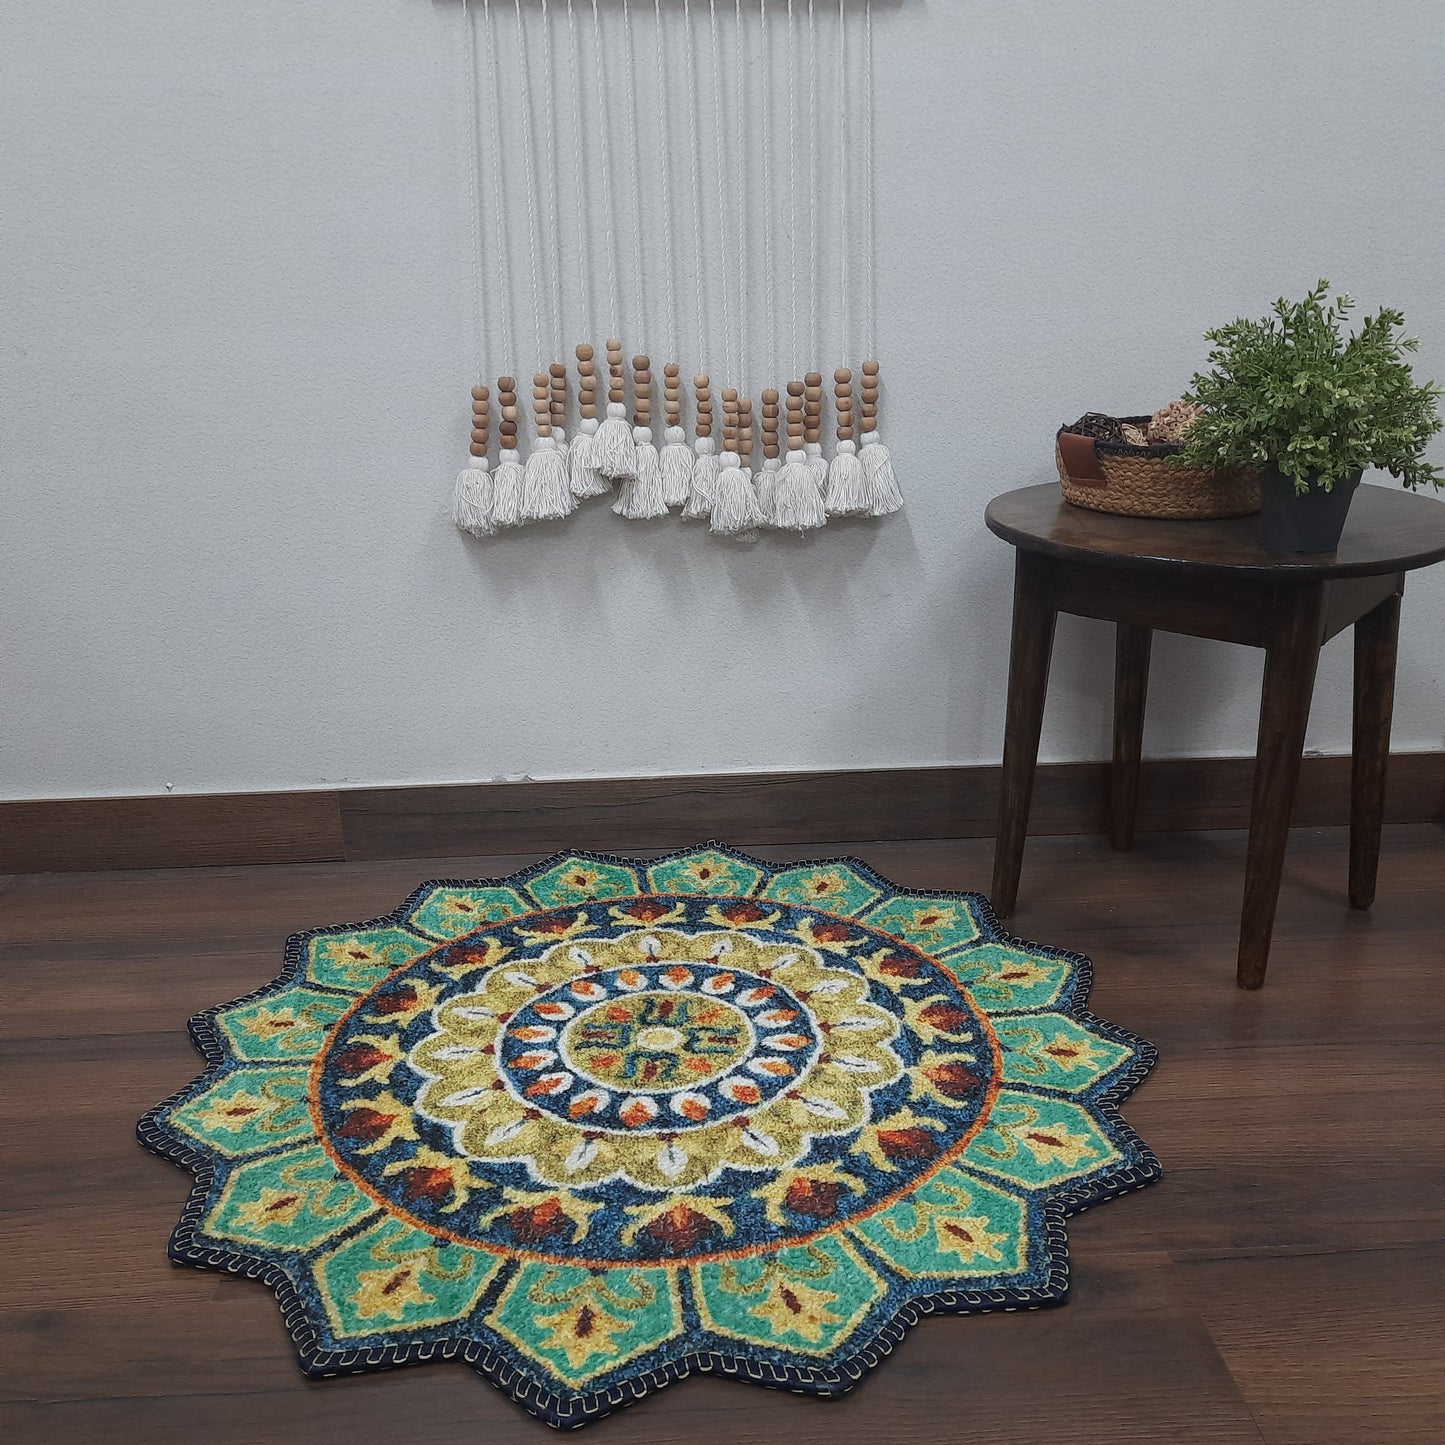 Avioni Home Floor Mats in Beautiful Traditional Cut loop Design Rangoli Colors | Anti Slip, Durable & Washable | Outdoor & Indoor